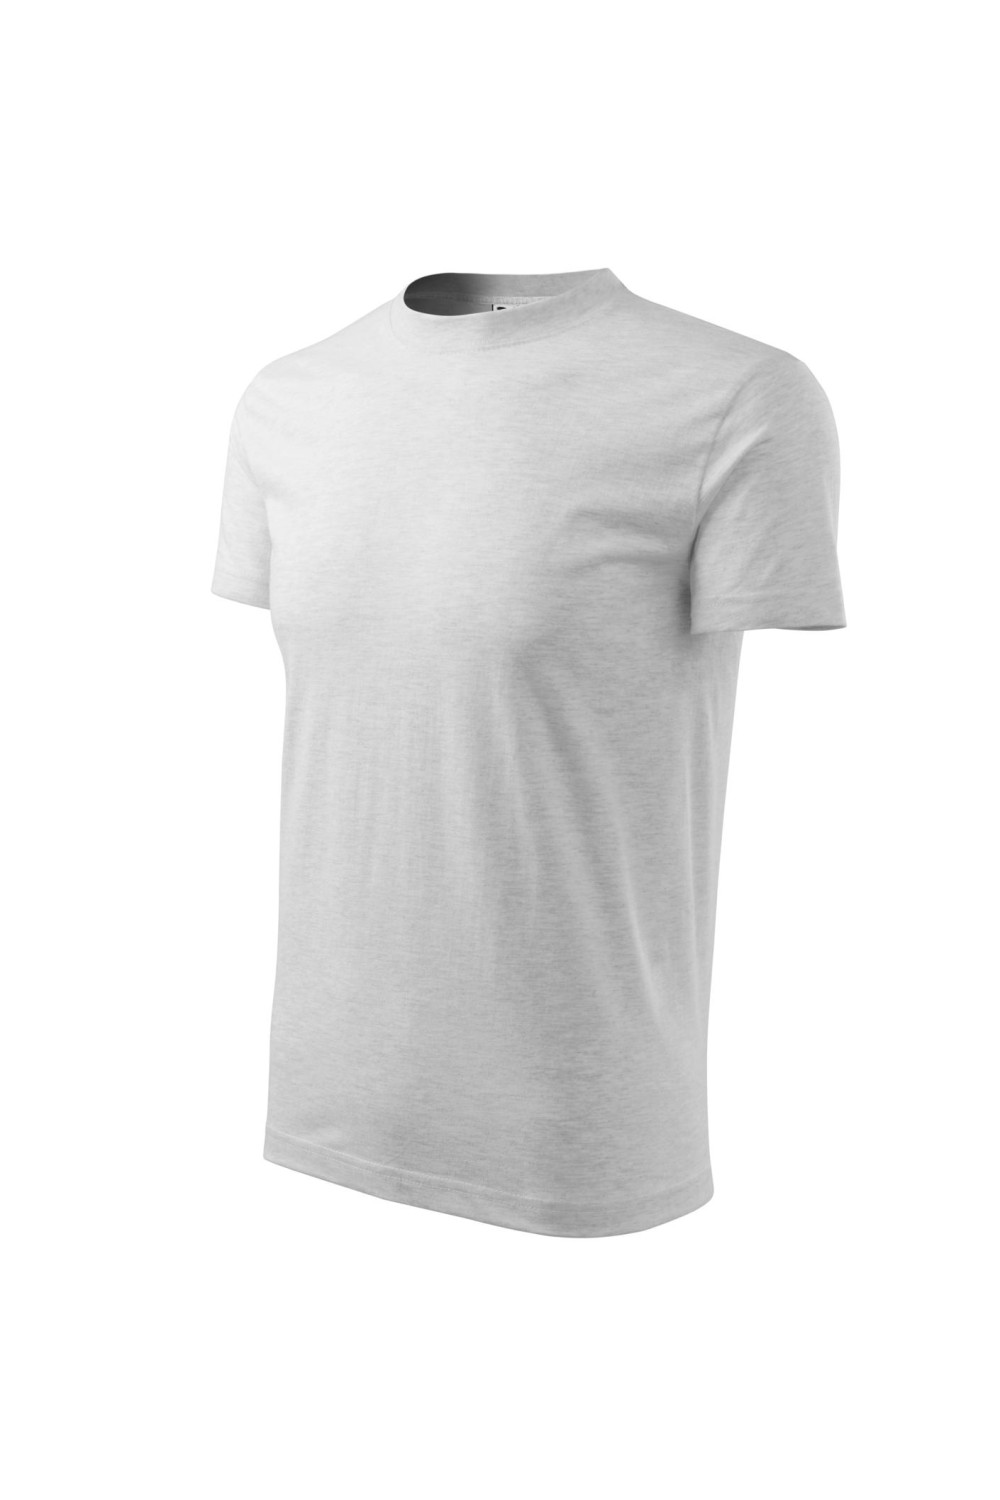 HEAVY 110 MALFINI ADLER Koszulka t-shirt unisex 100% bawełna jasnoszary melanż